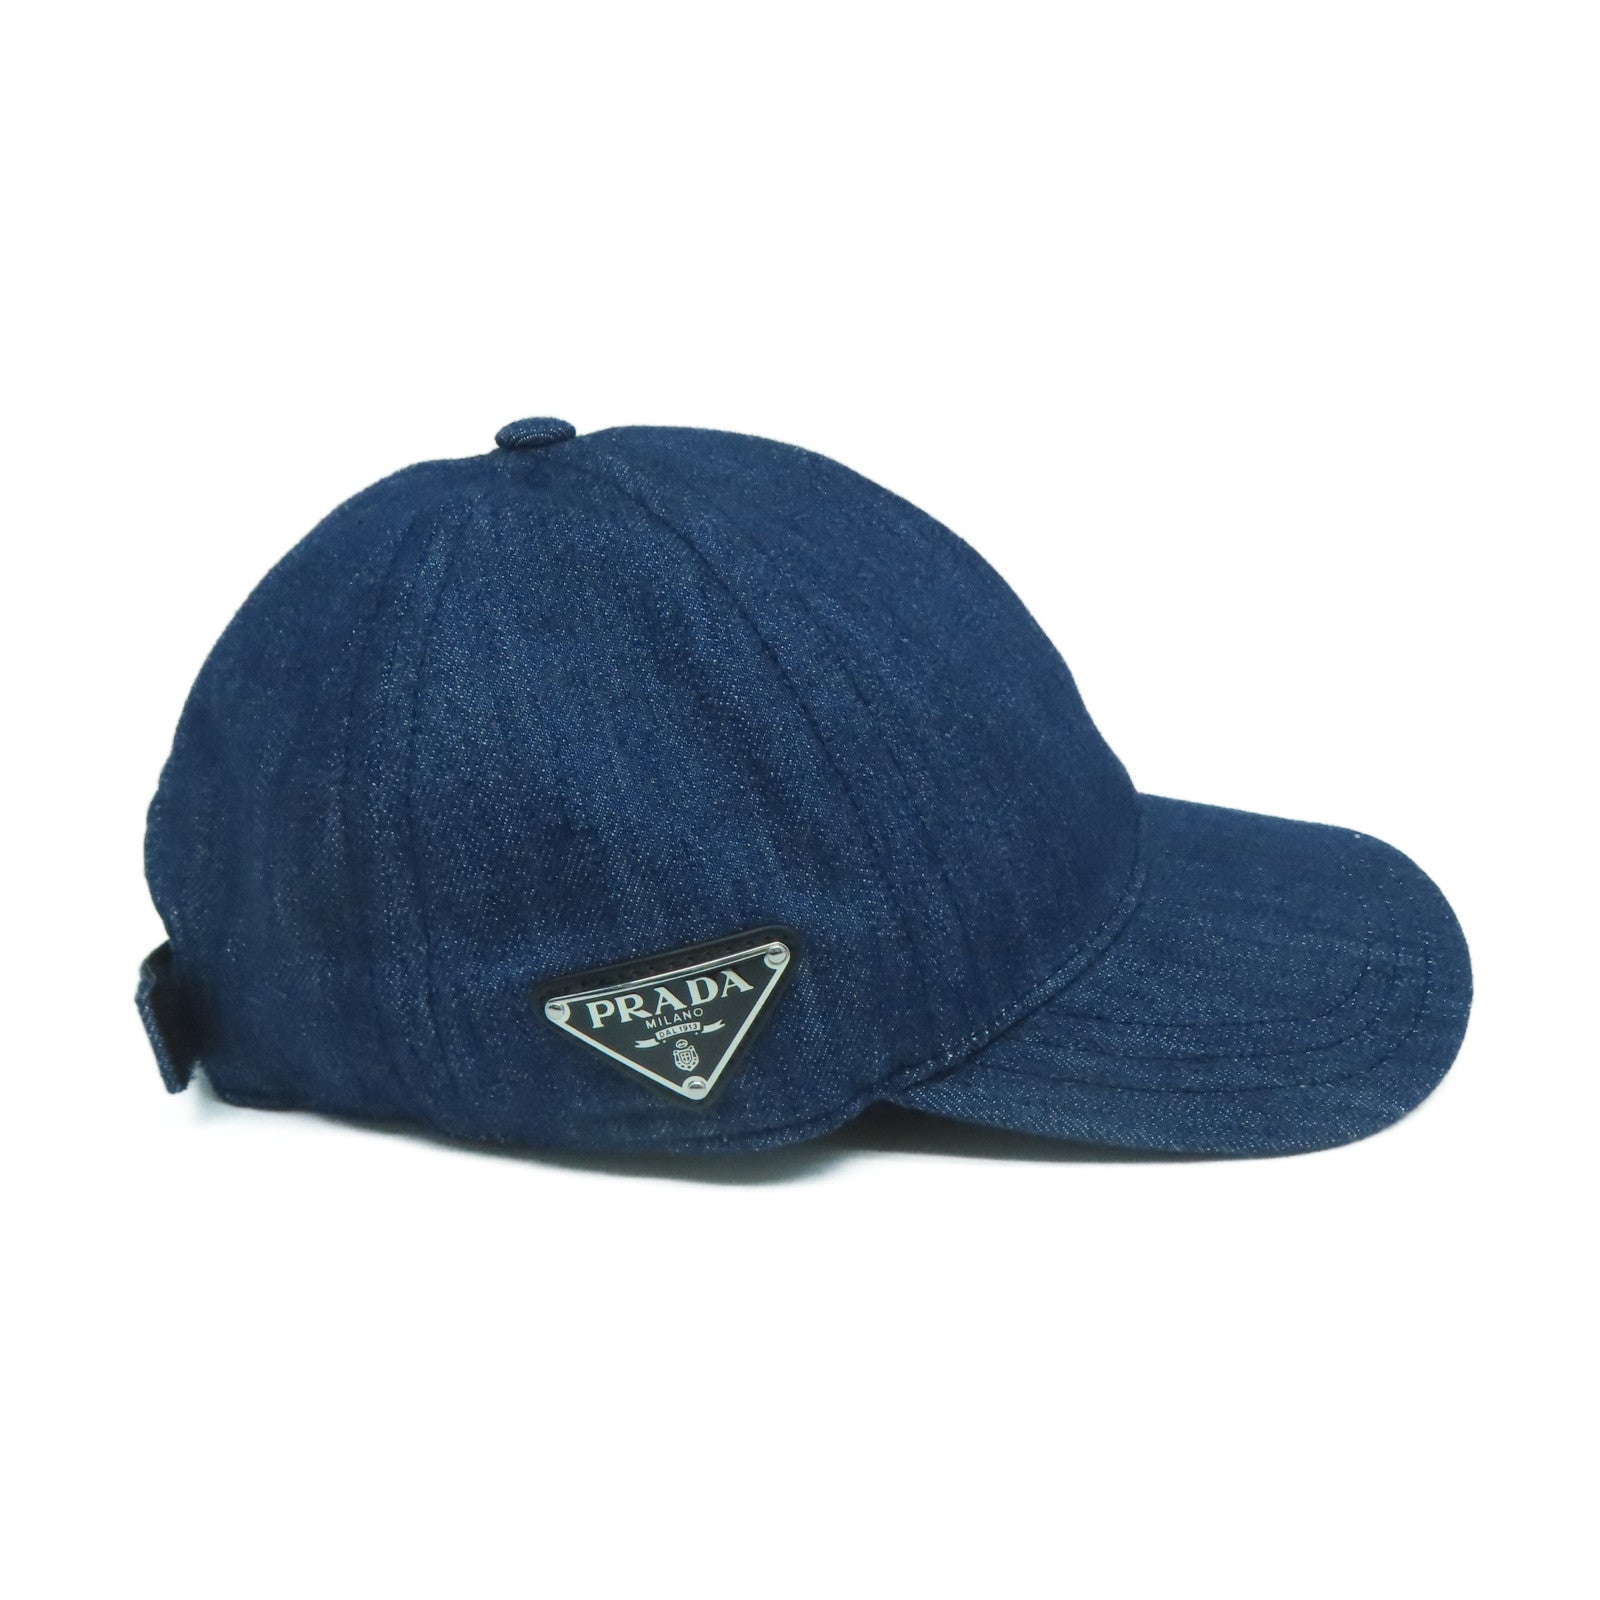 PRADA 牛仔布Hat銀扣棒球帽藍色